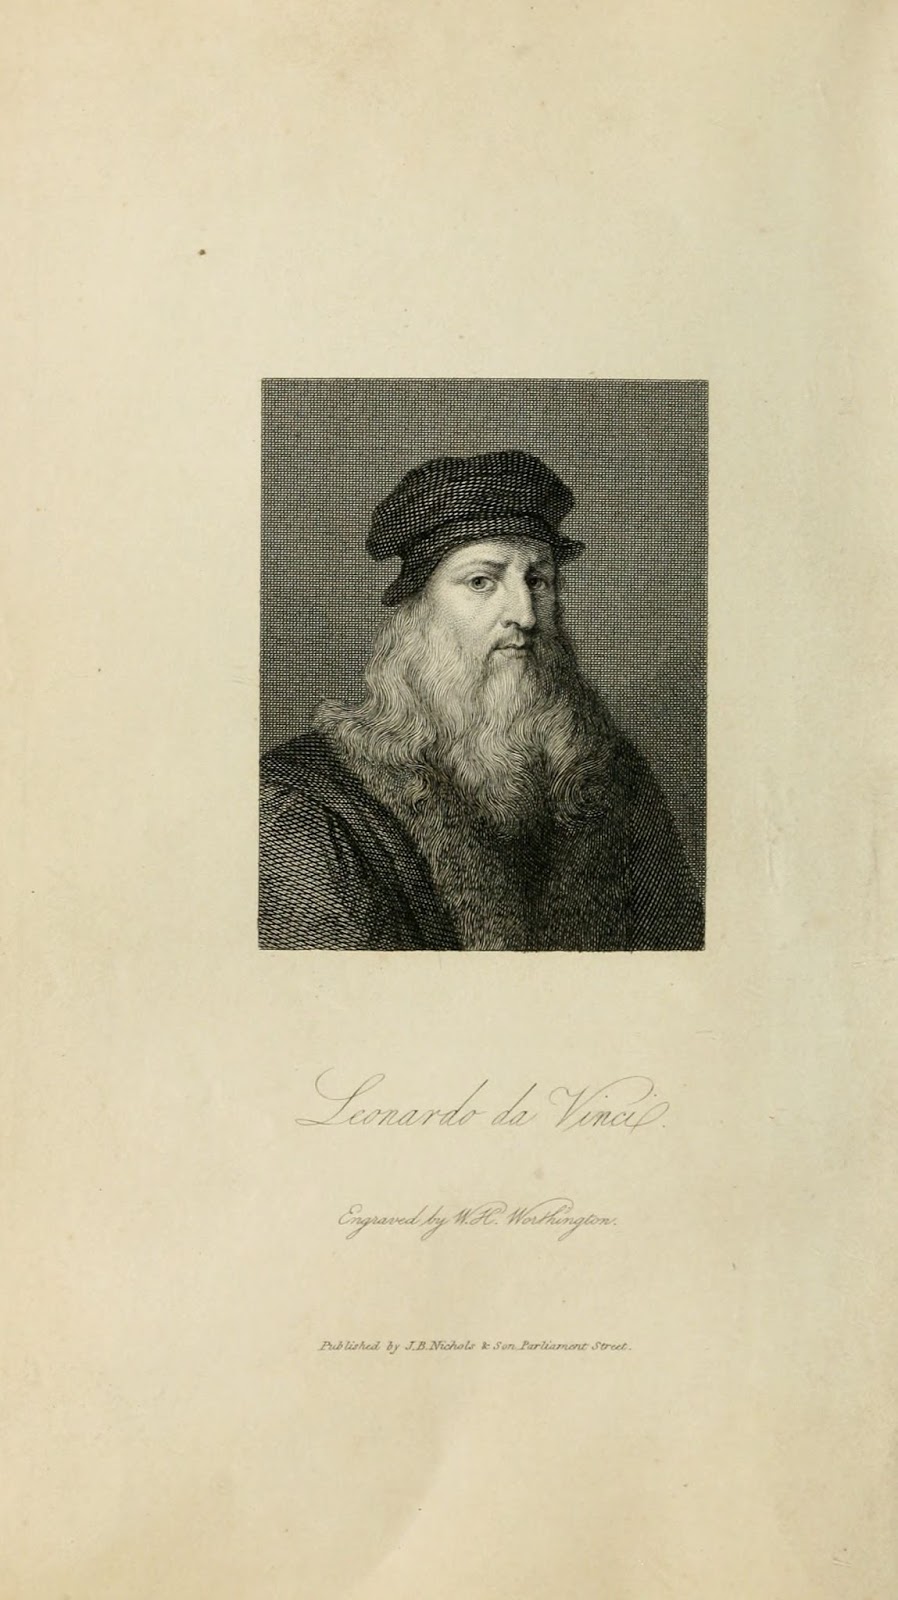 Leonardo+da+Vinci-1452-1519 (482).jpg